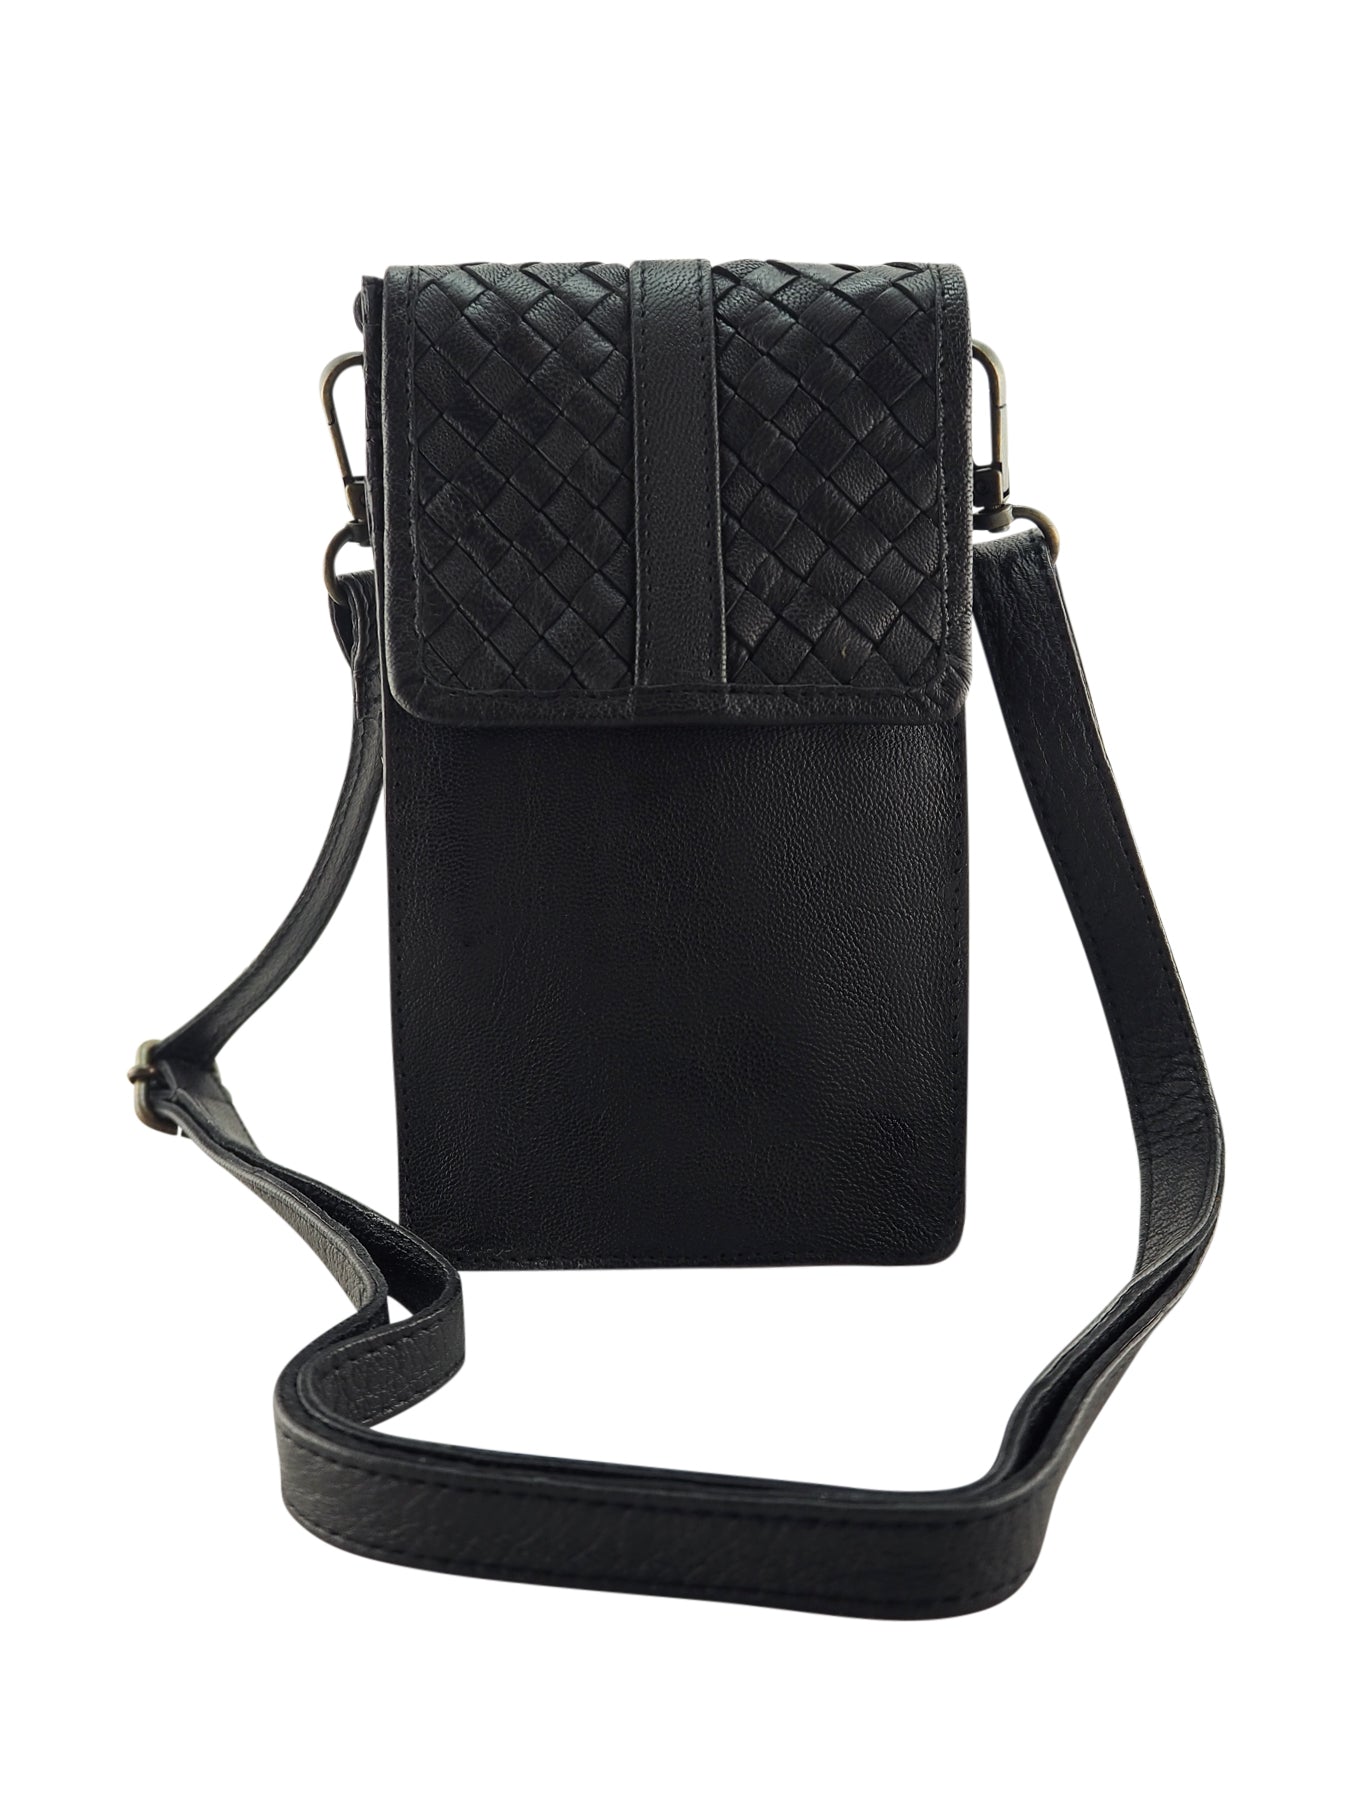 Ada Phone Bag | Fuchsia-Handbags-CadelleLeather